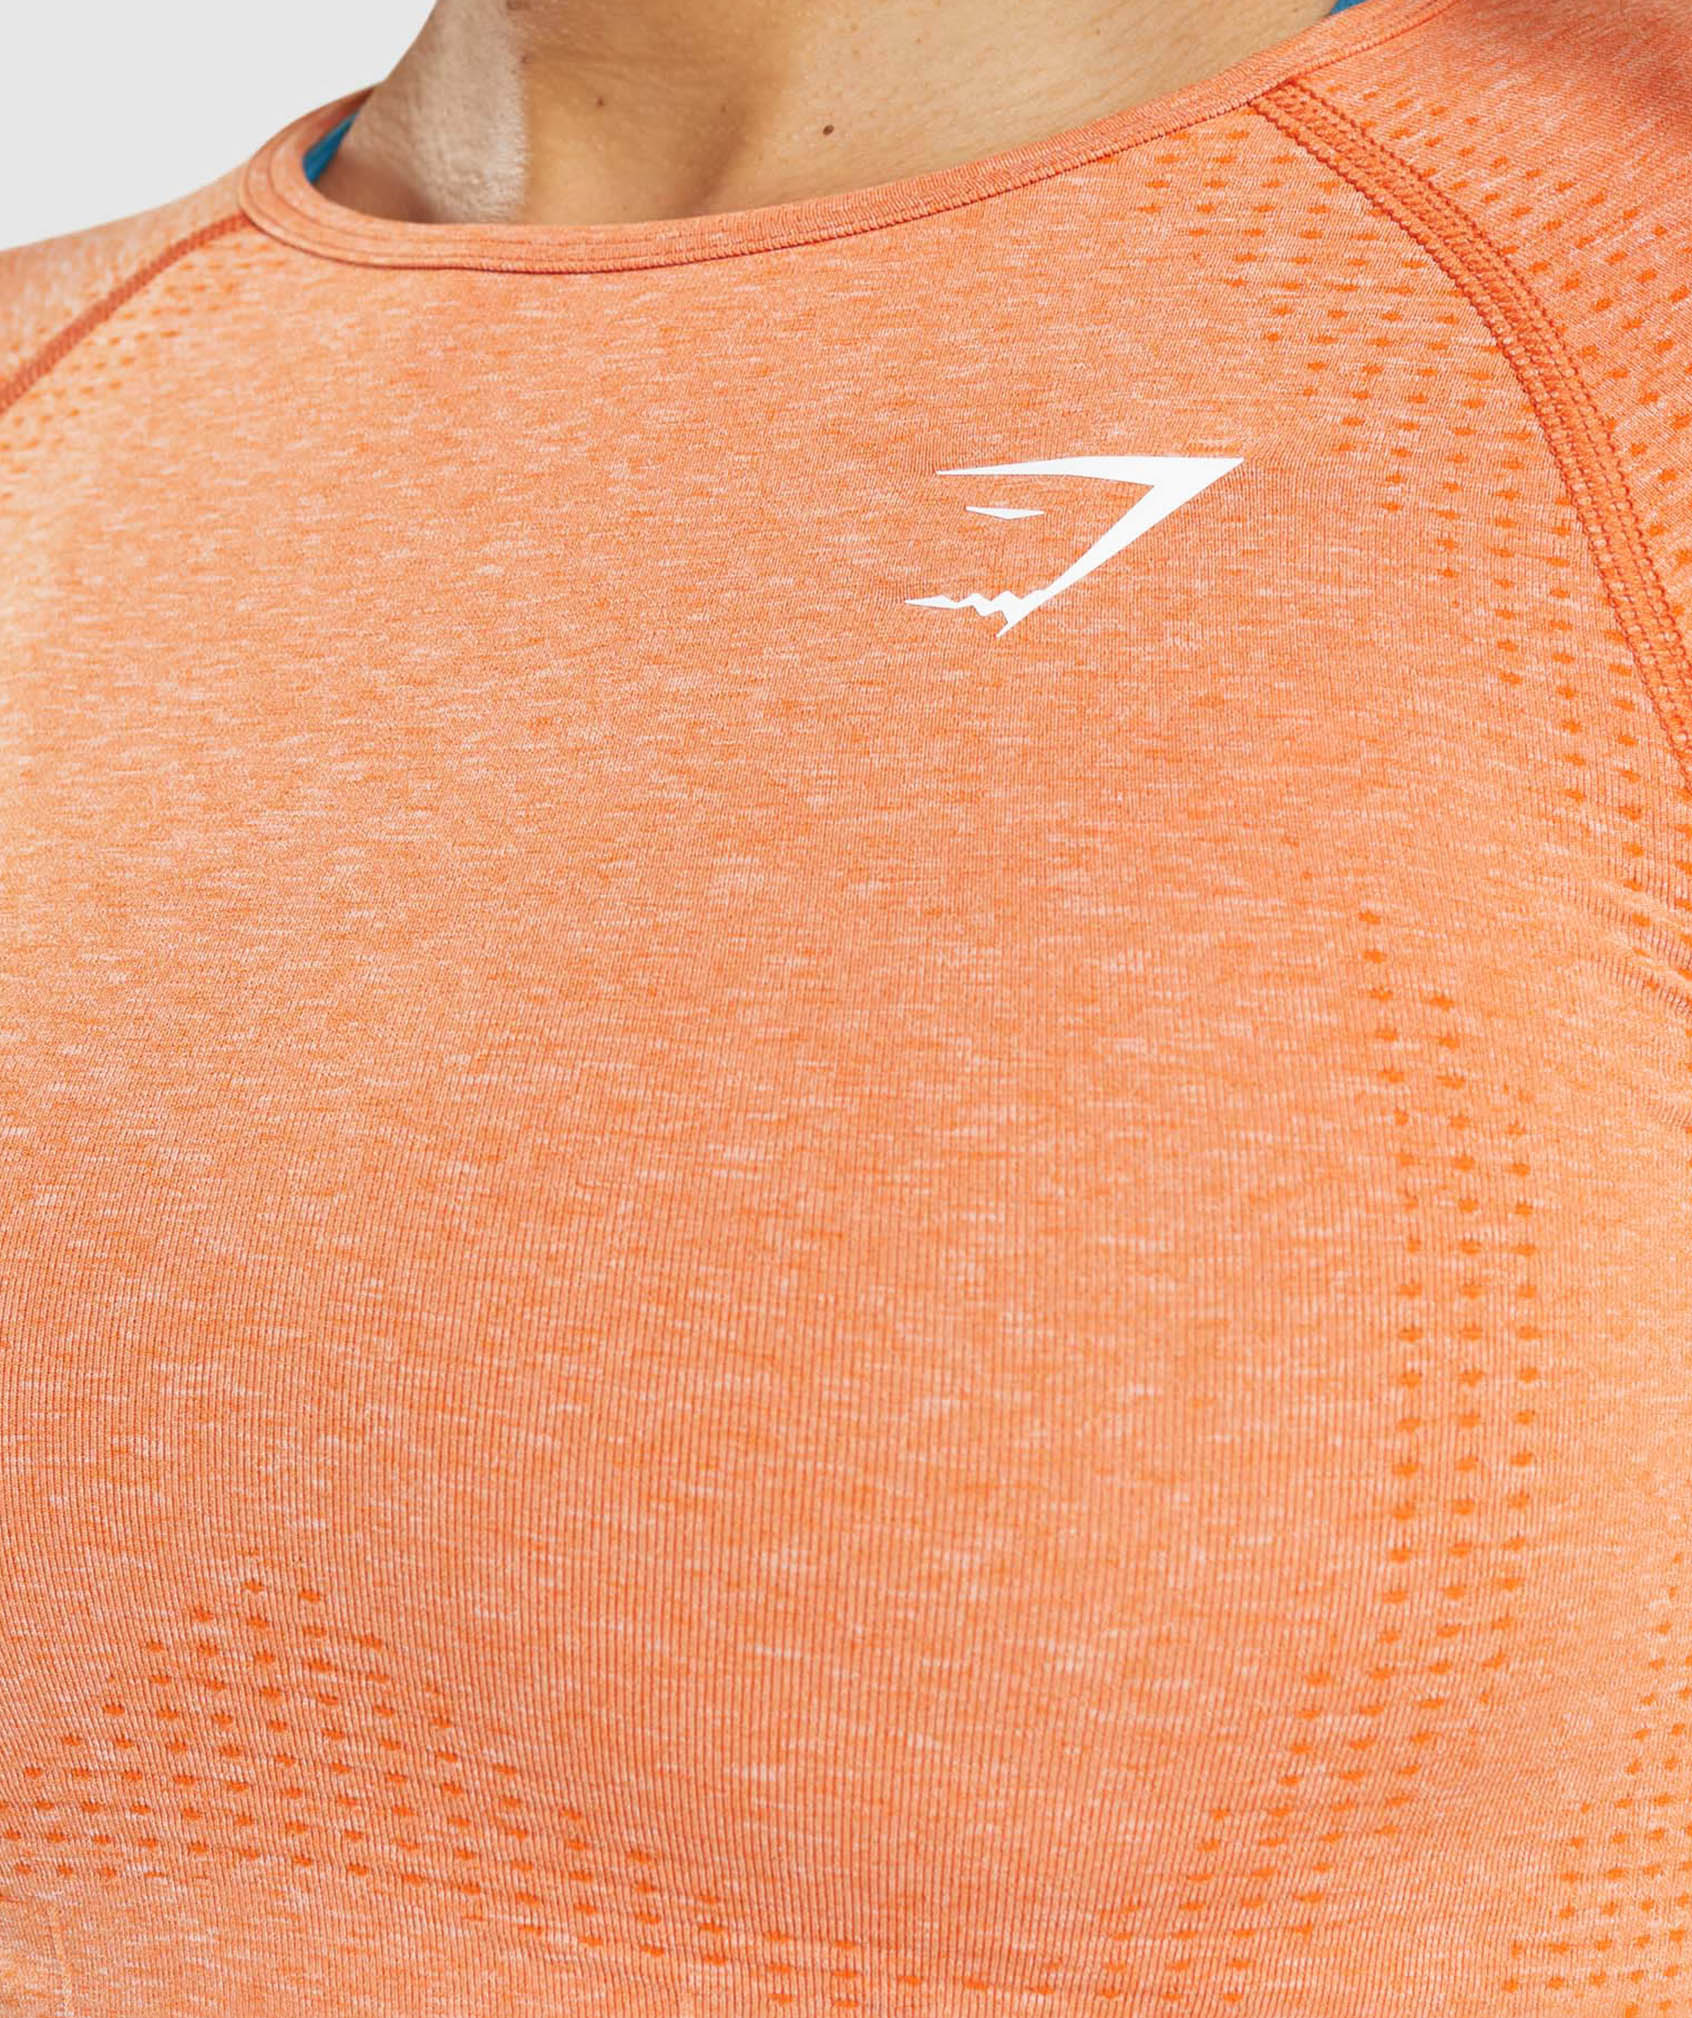 Gymshark Vital Seamless 2.0 Shorts - Orange Marl, - Depop